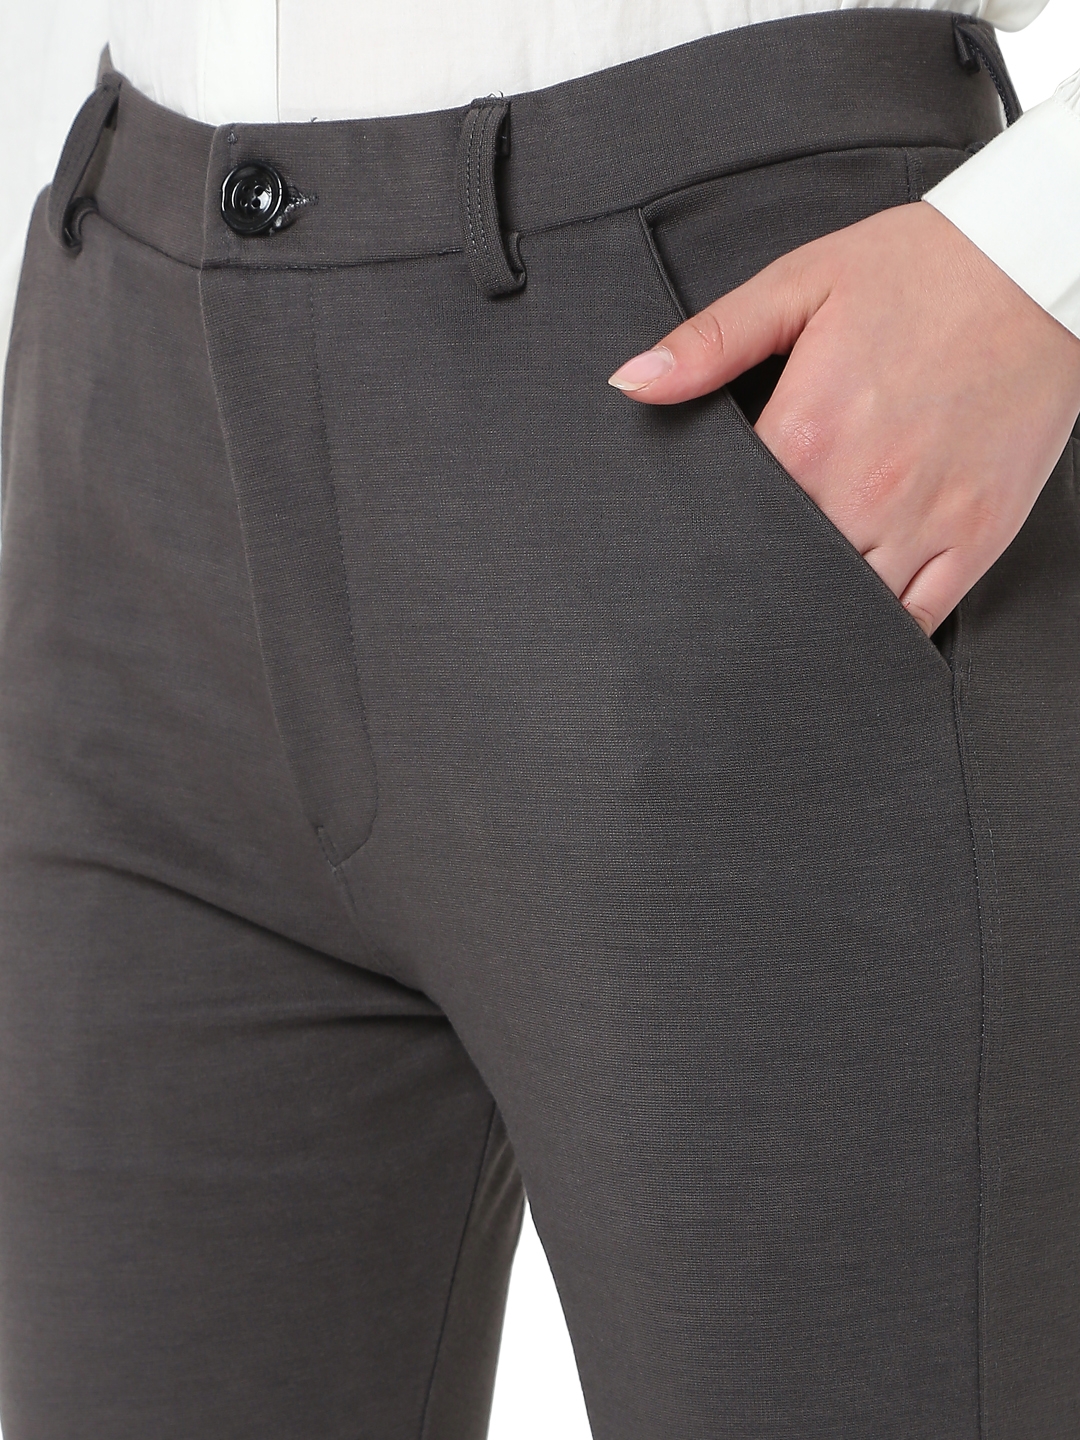 Buy Lymio Women Trousers  Girls Trousers P15 XS Grey at Amazonin